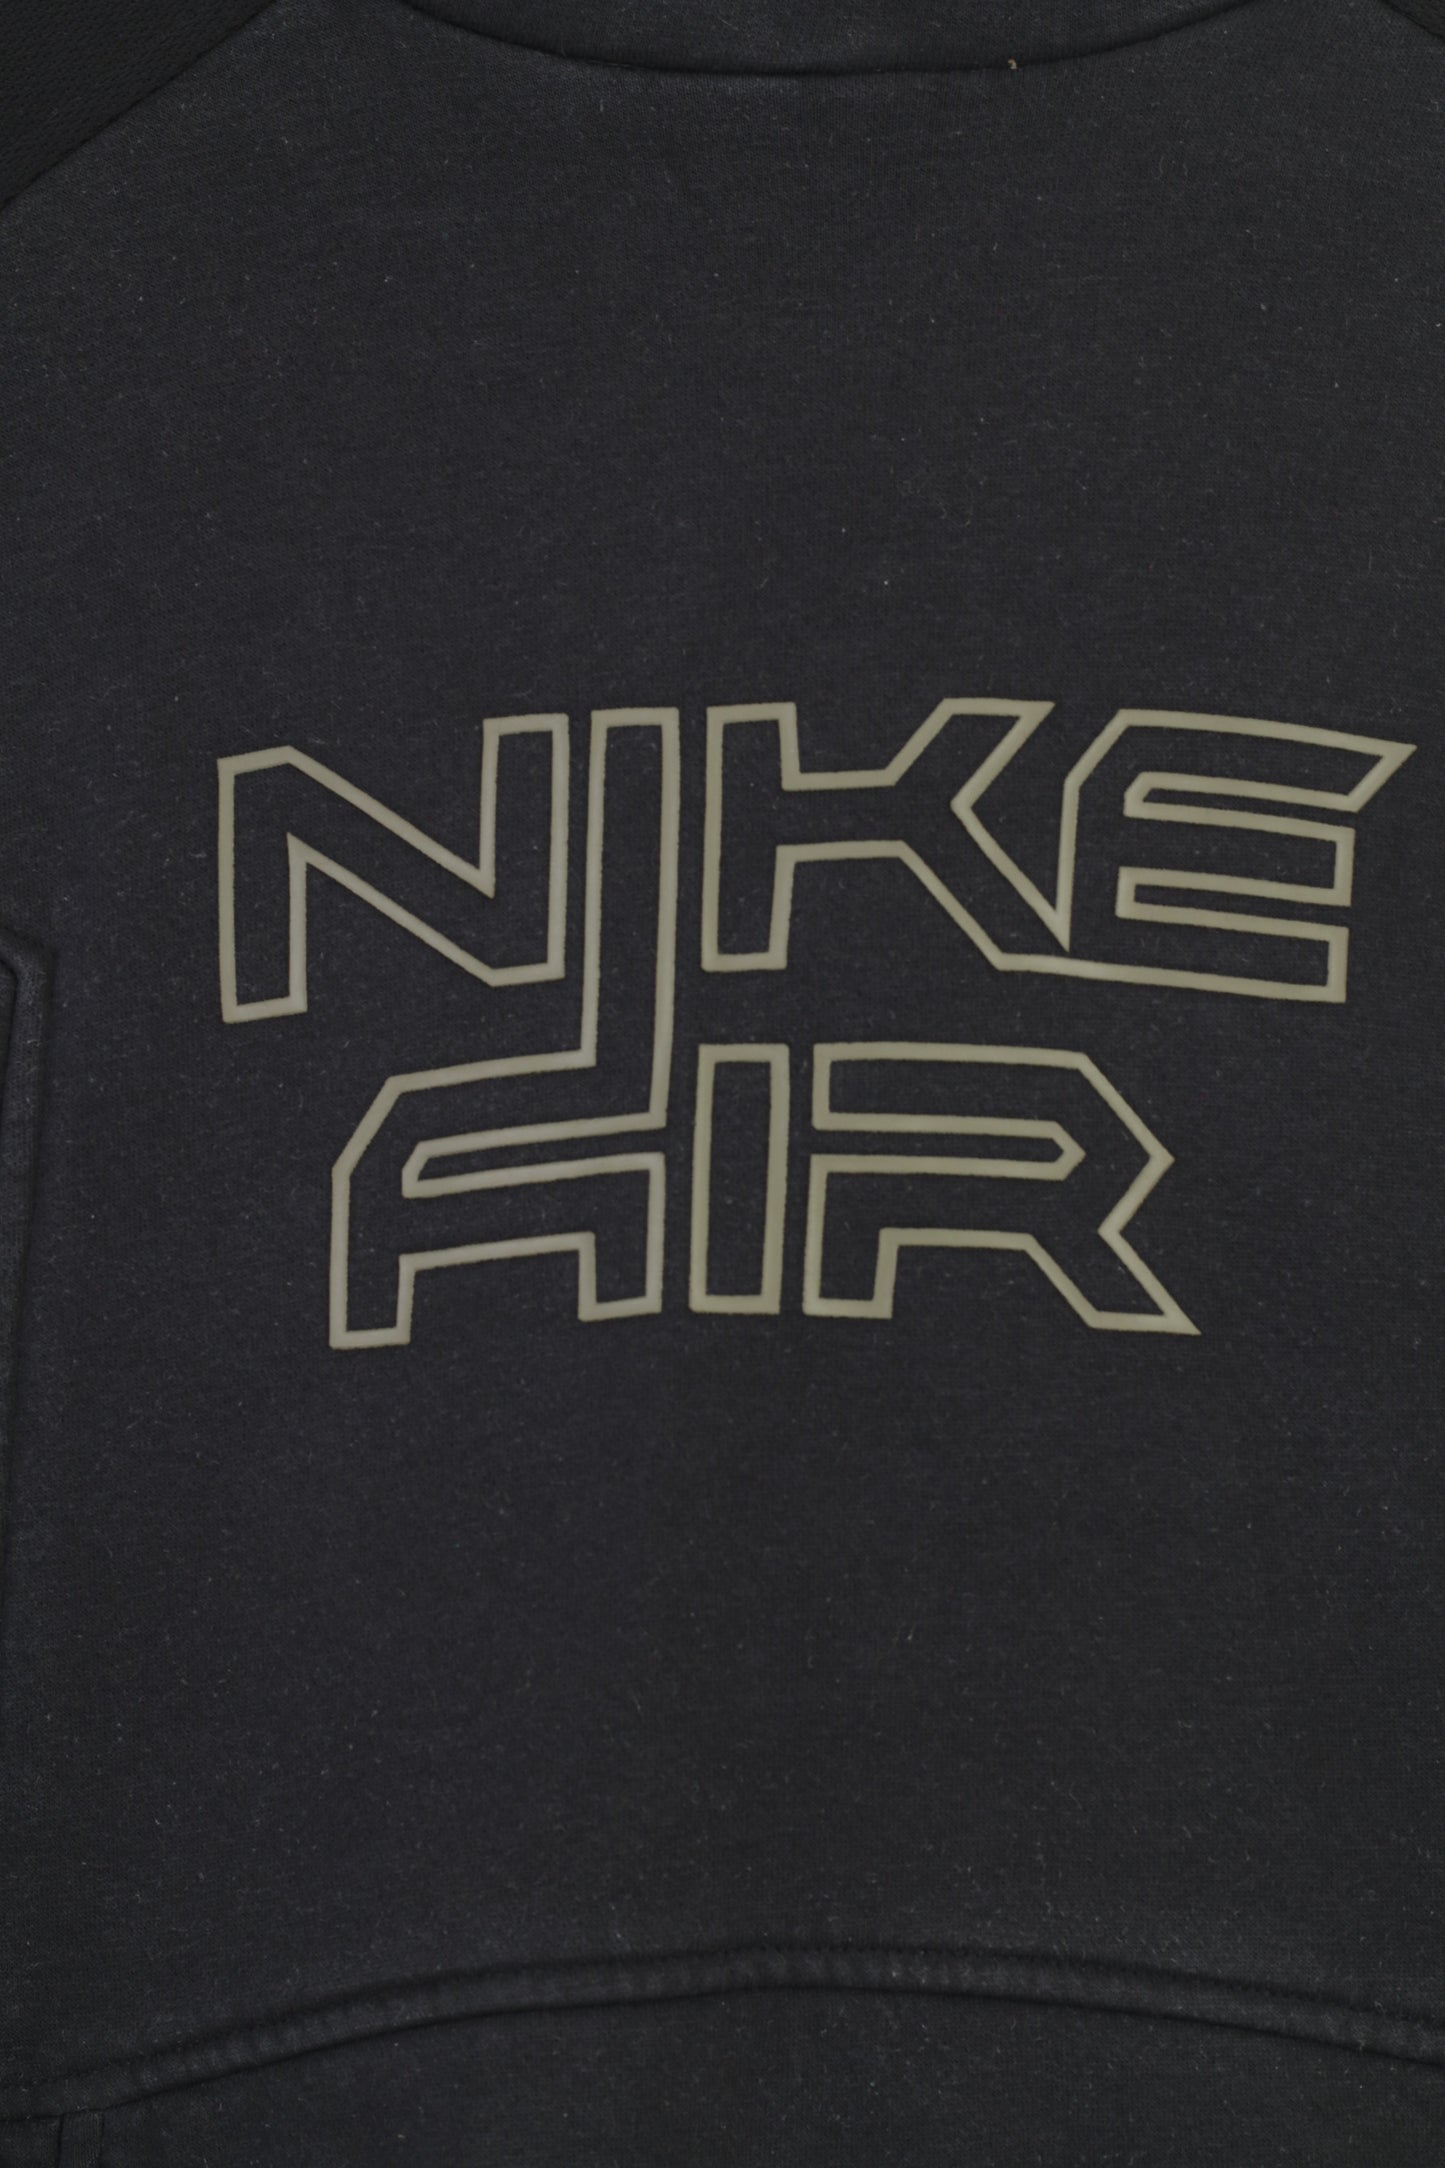 Felpa Nike Air Boys 158-170 XL Felpa nera con cappuccio sportivo